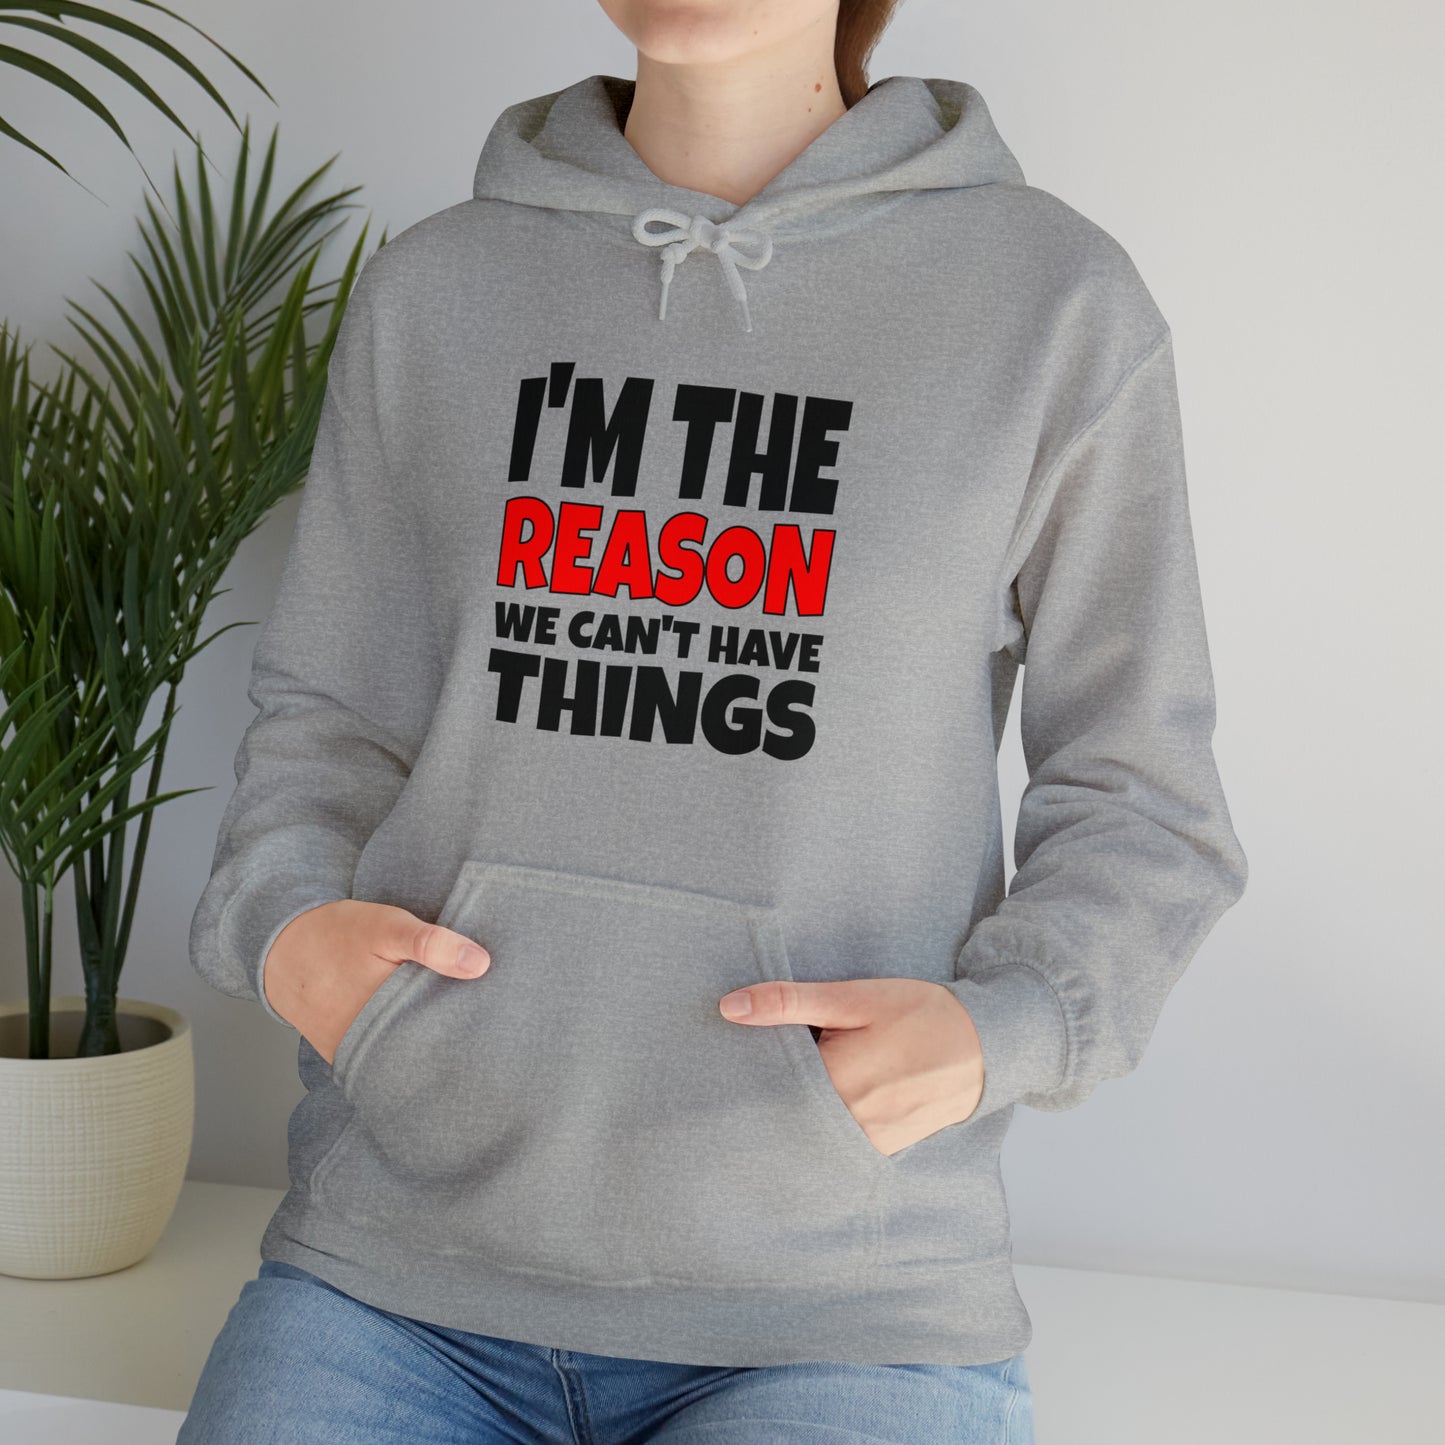 I'm the Reason - Hooded Sweatshirt